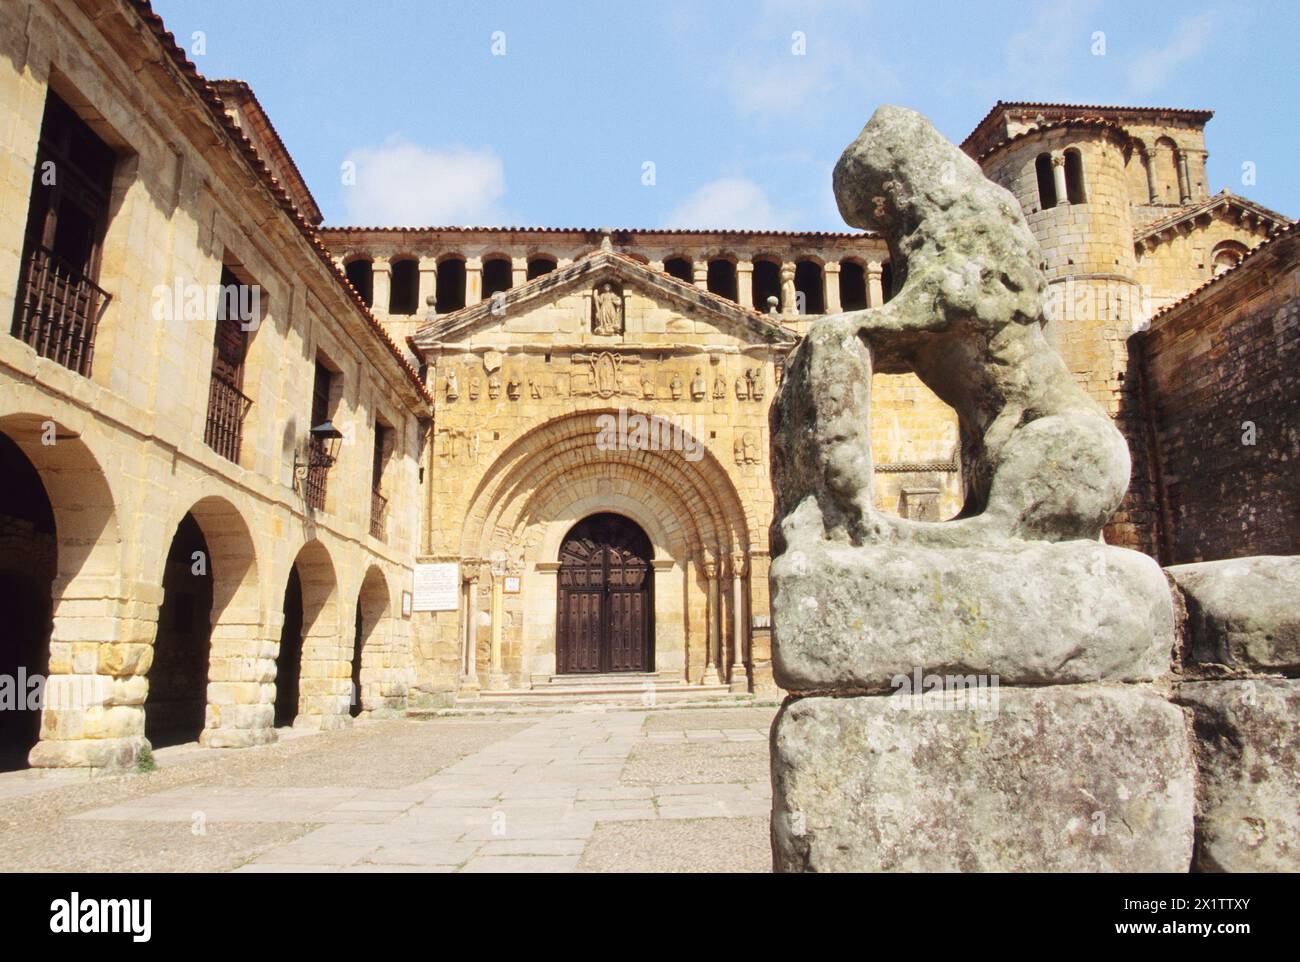 Santillana Del Mar Cantabria Spain. Romanesque medieval 12th century architecture Europe Santa Juliana Collegiate Church. Stock Photo